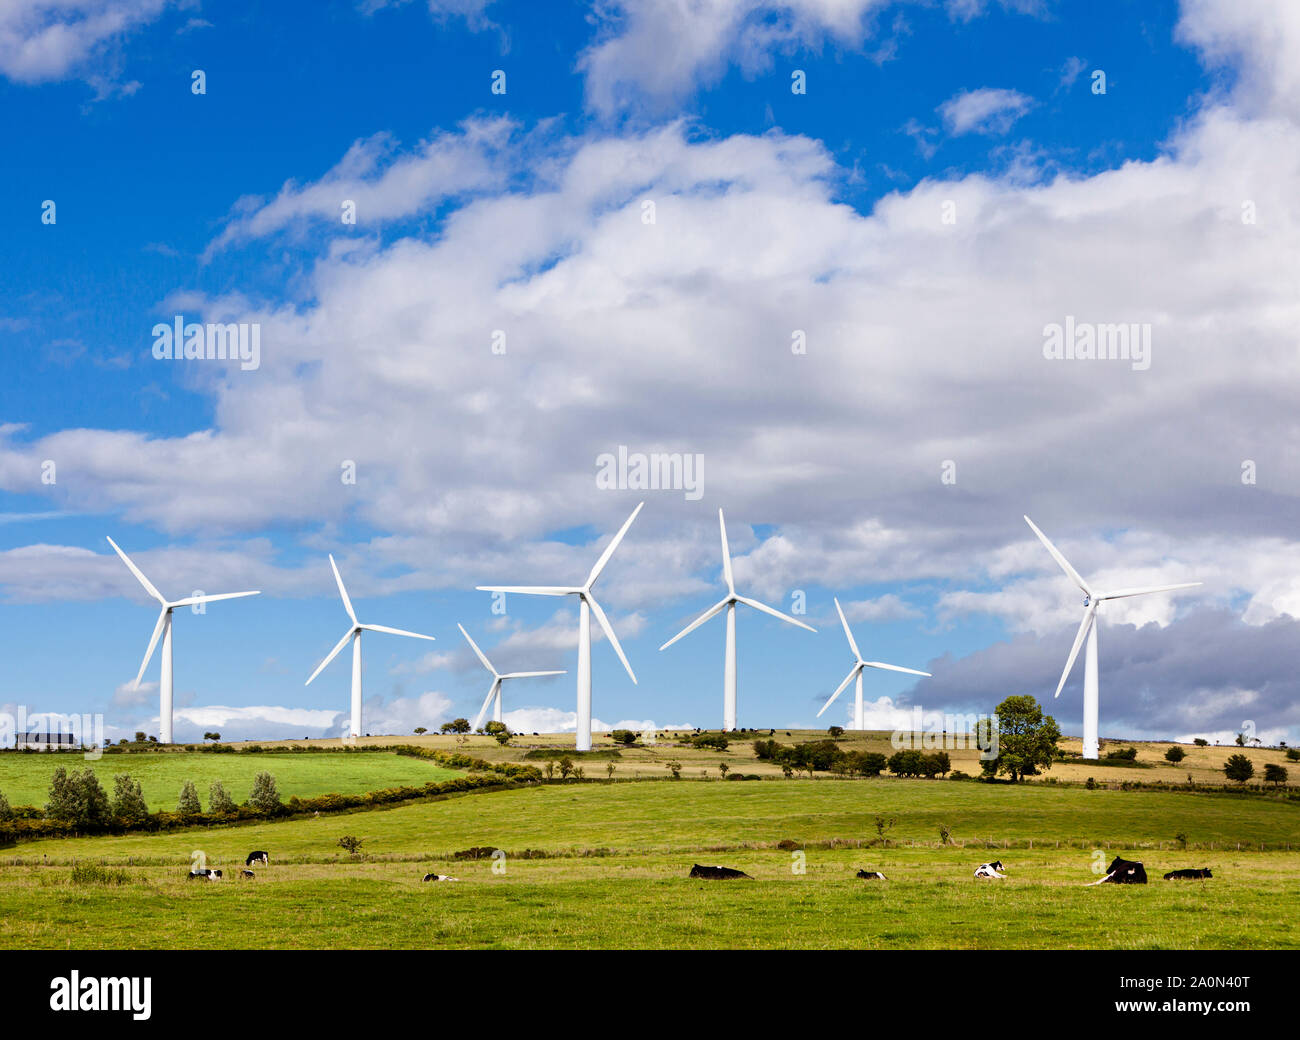 Wind farm, Rural England, UK Banque D'Images